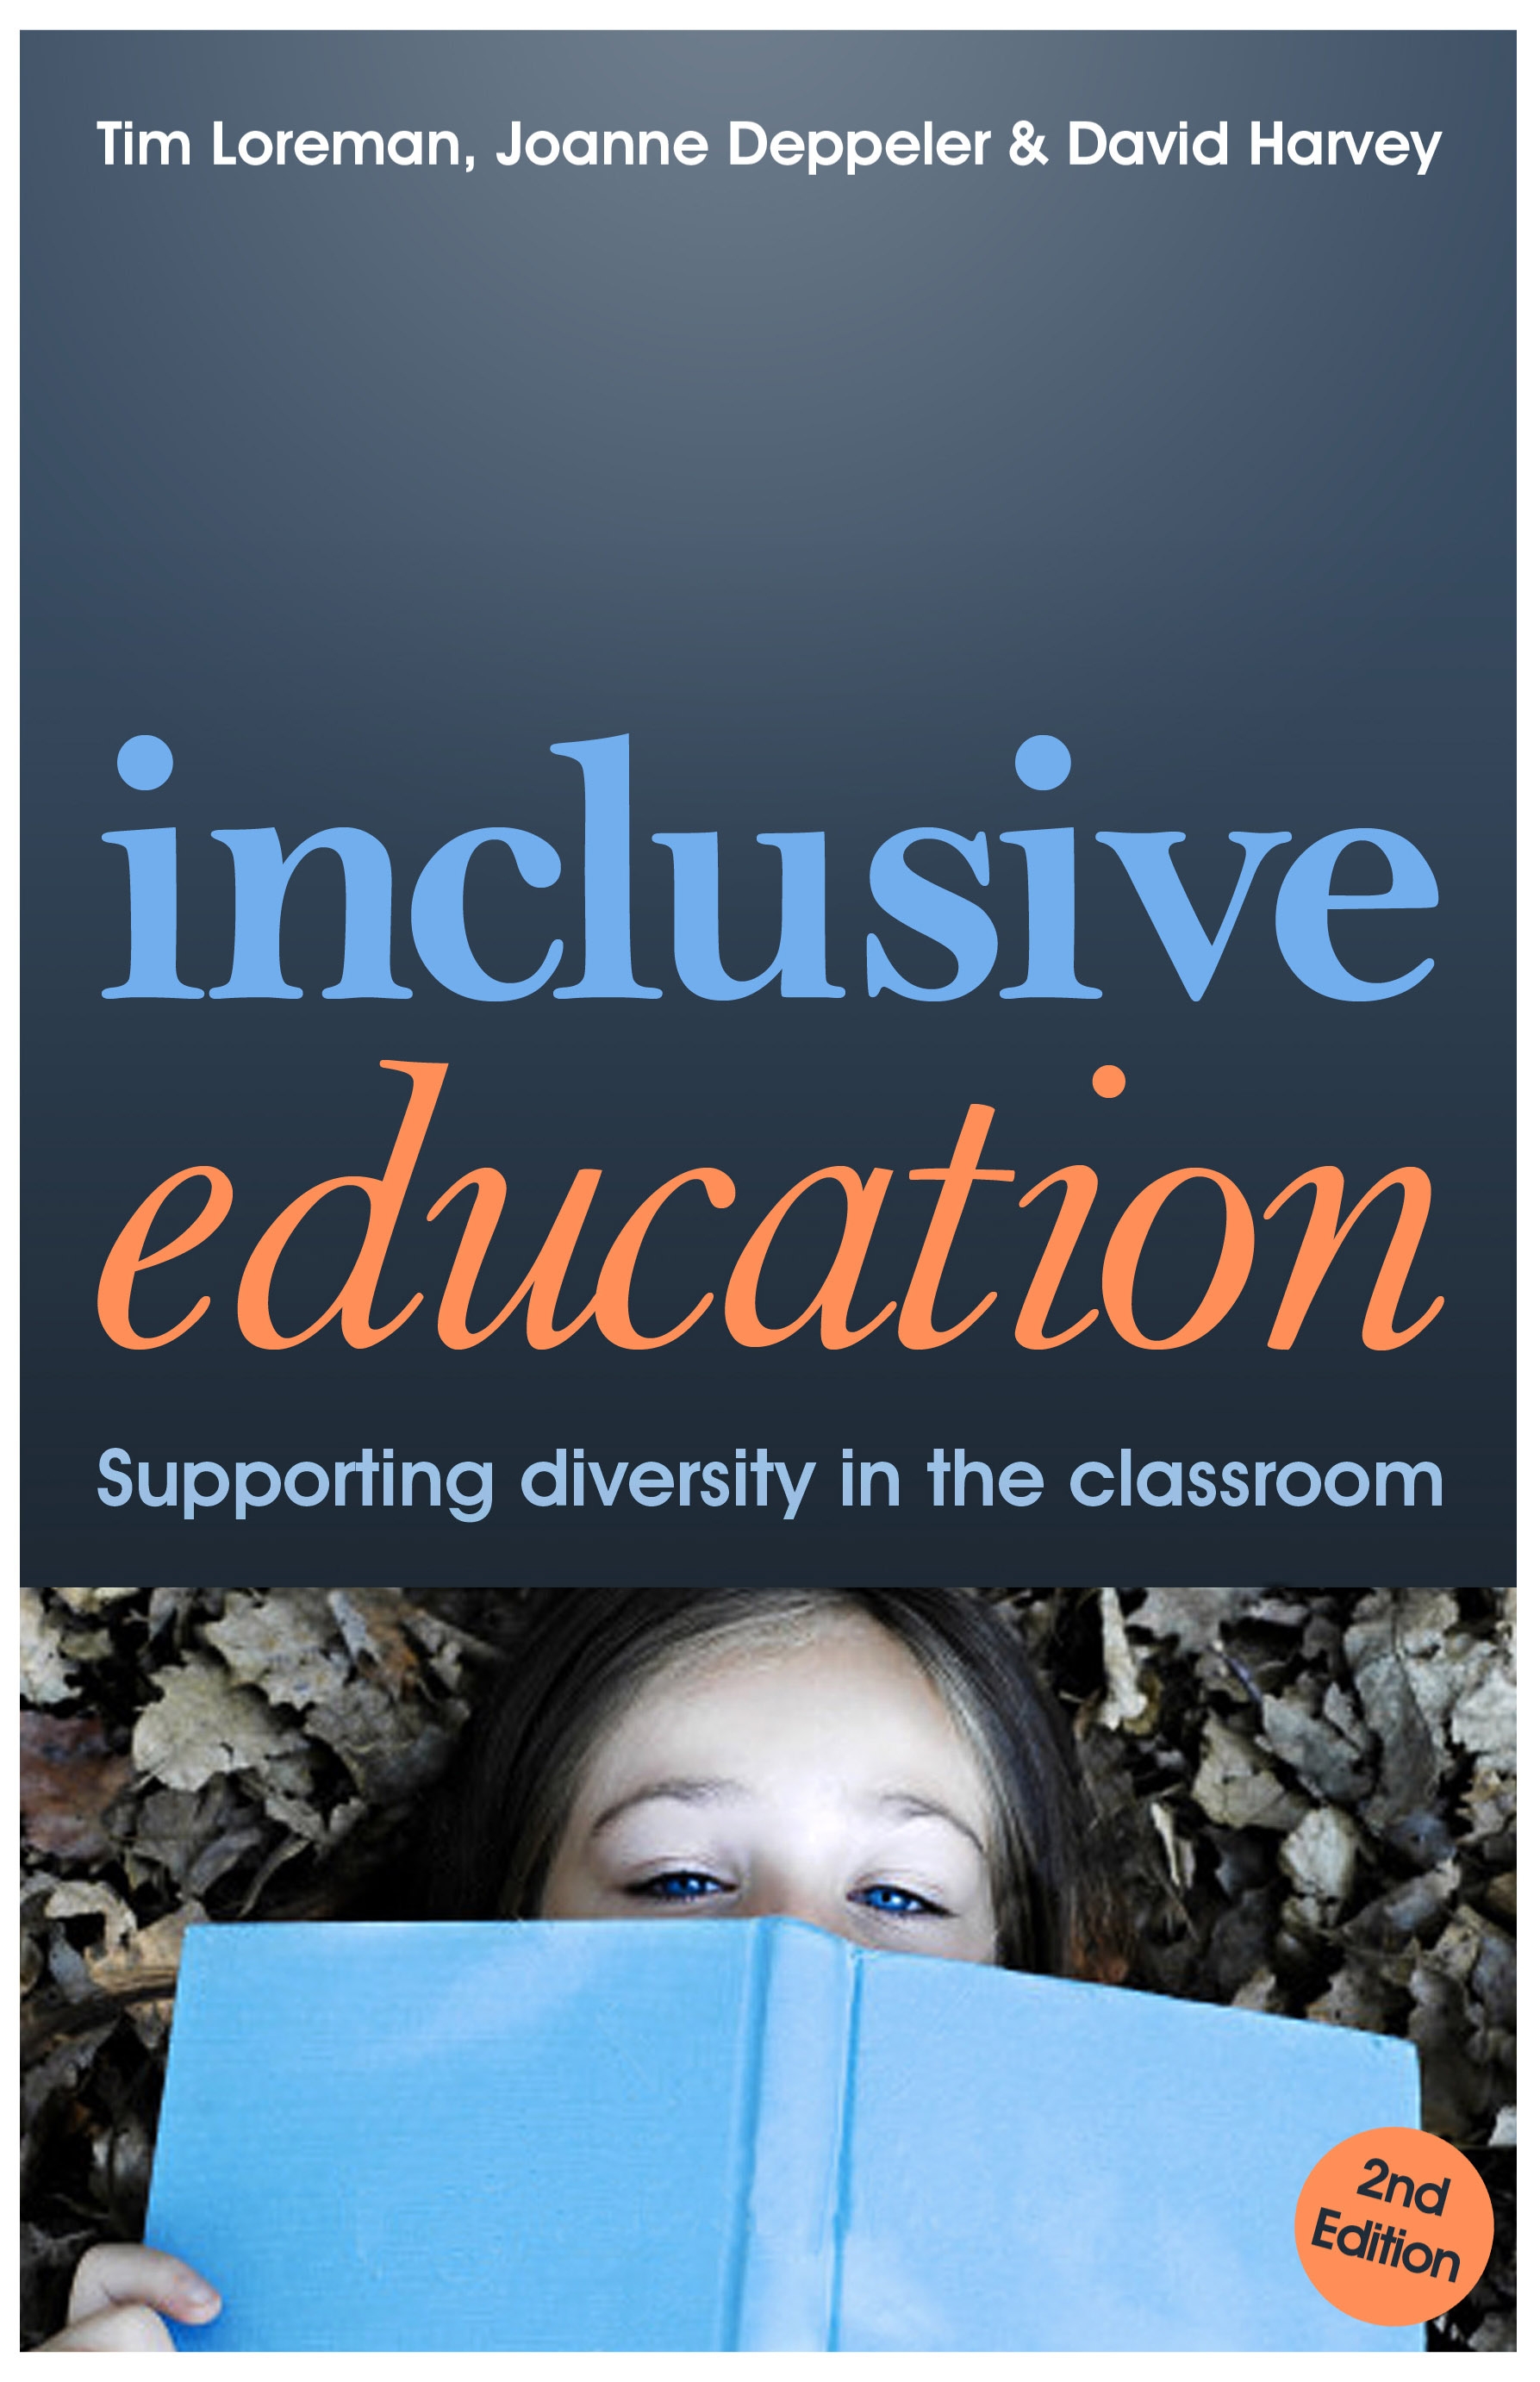 inclusive education 2nd ed.jpg